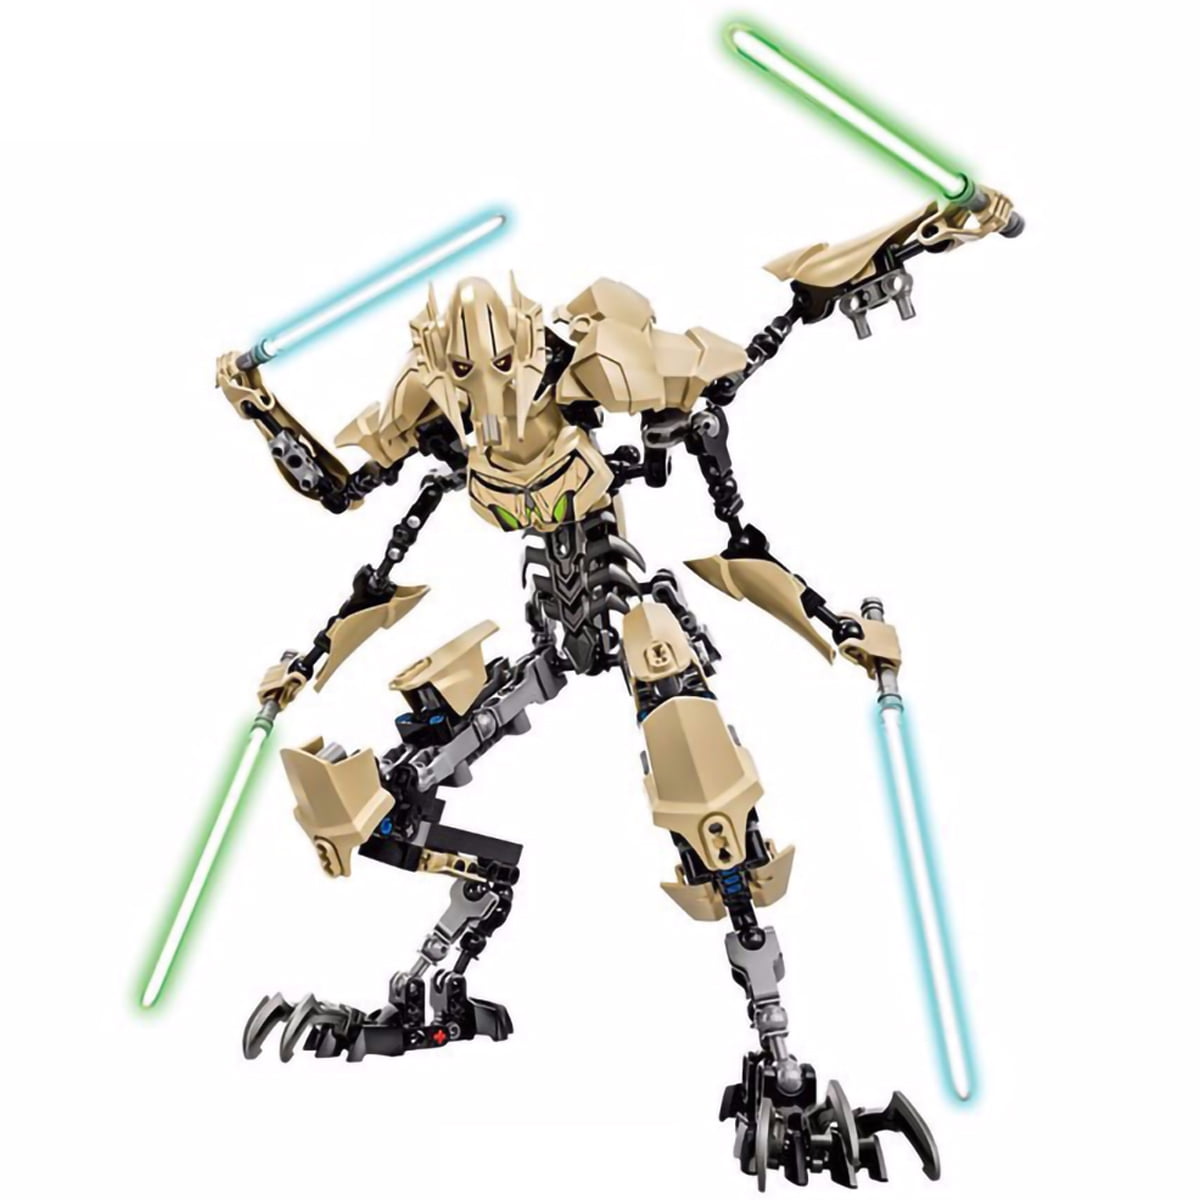 General Grievous Wheel Bike Action Figure for sale online Hasbro Star Wars Transformer 